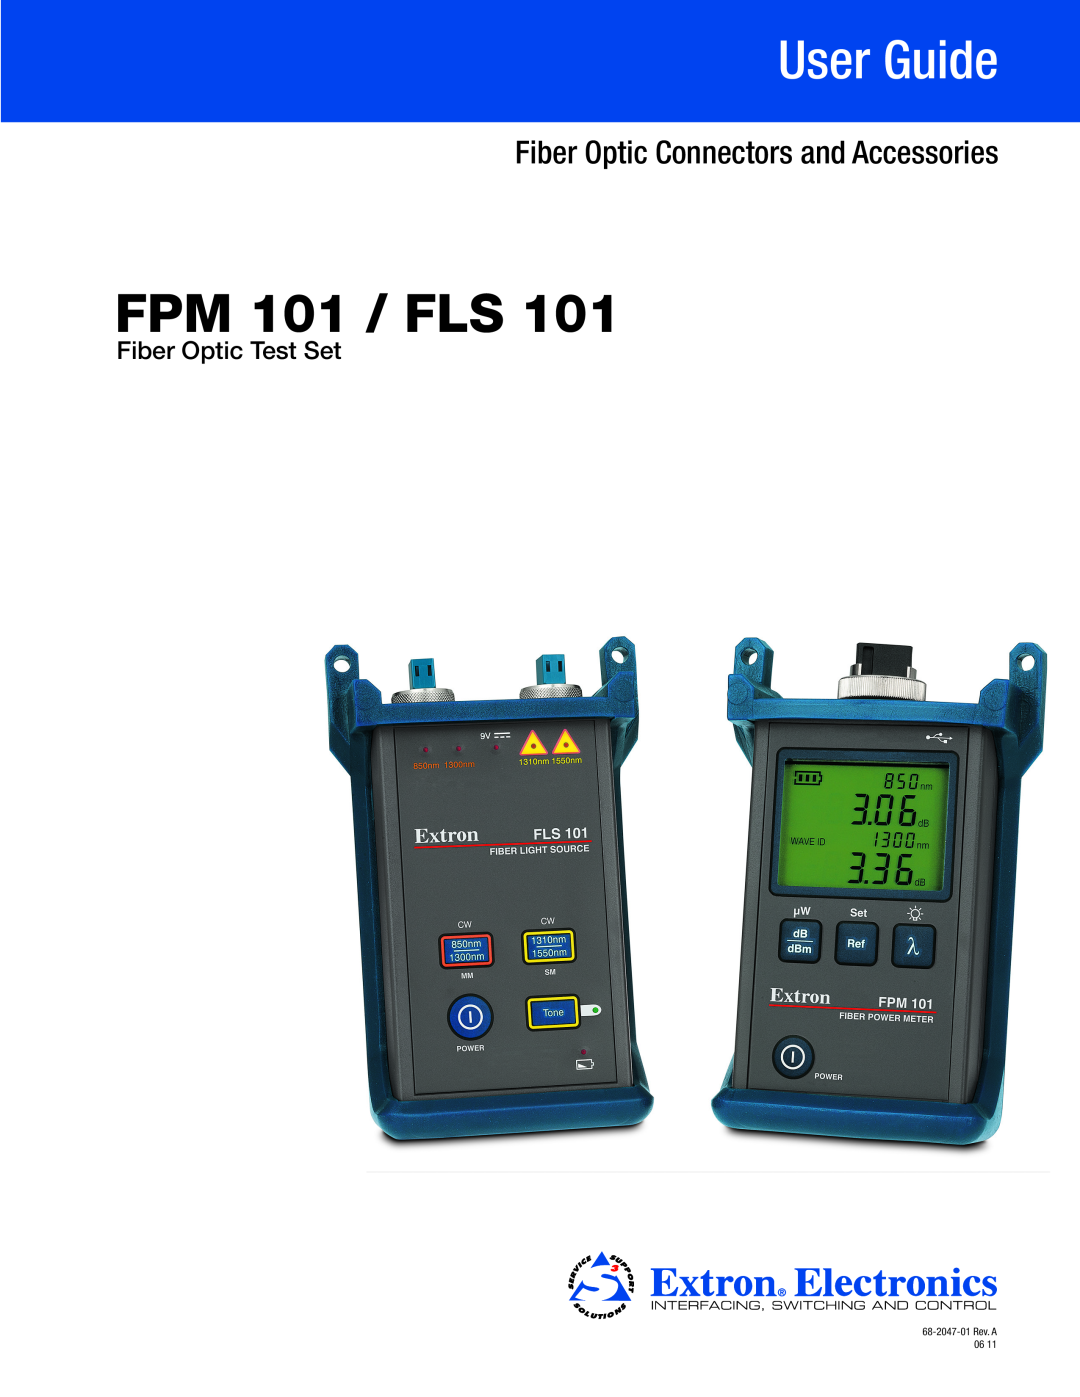 Extron electronic manual Fiber Optic Test Set, User Guide, FPM 101 / FLS, Fiber Optic Connectors and Accessories 